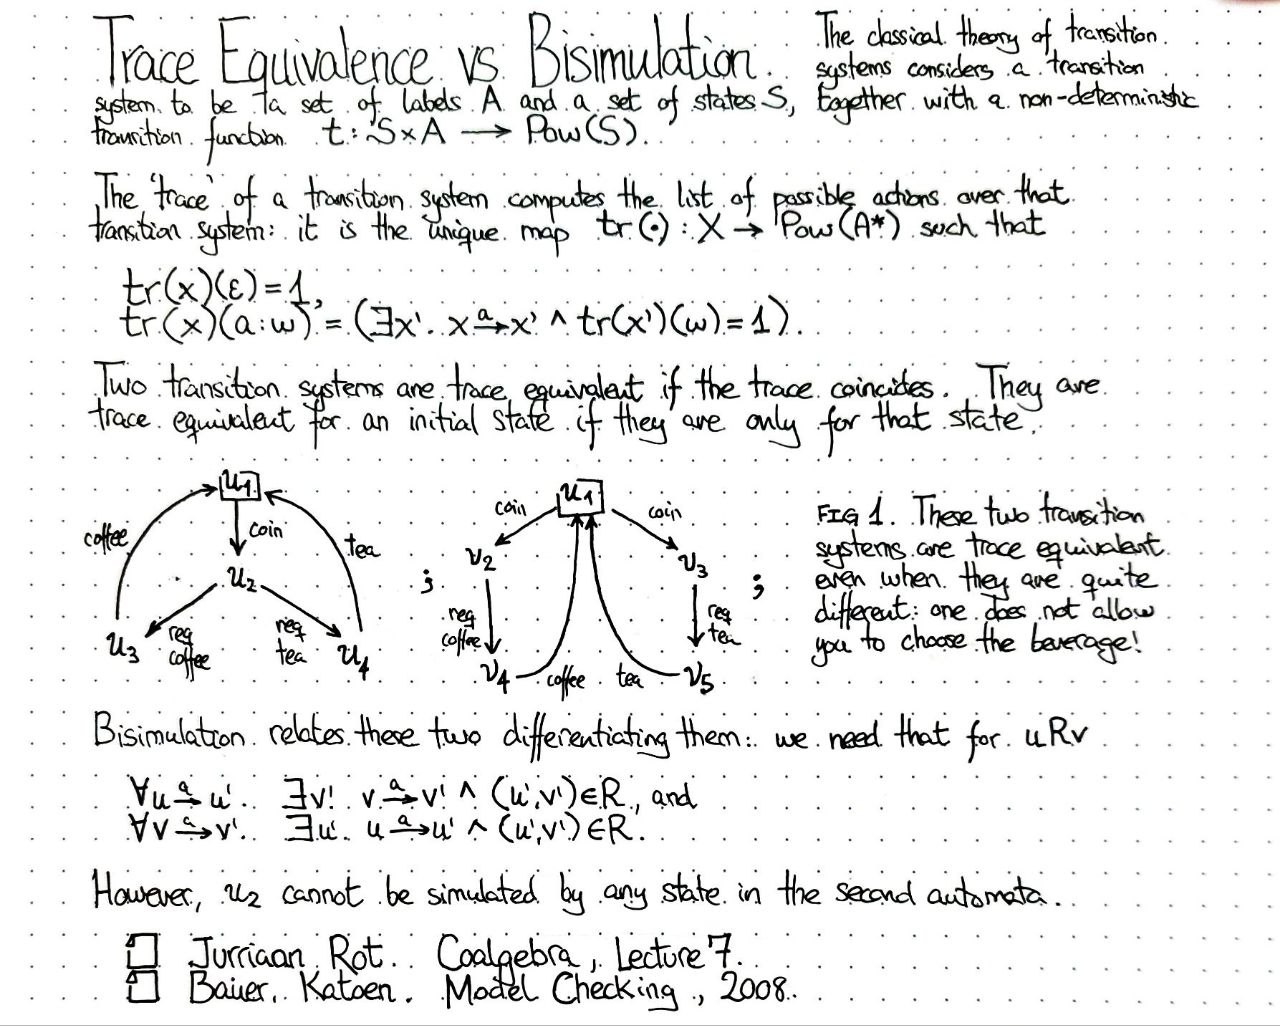 trace-equivalence-versus-bisimulation